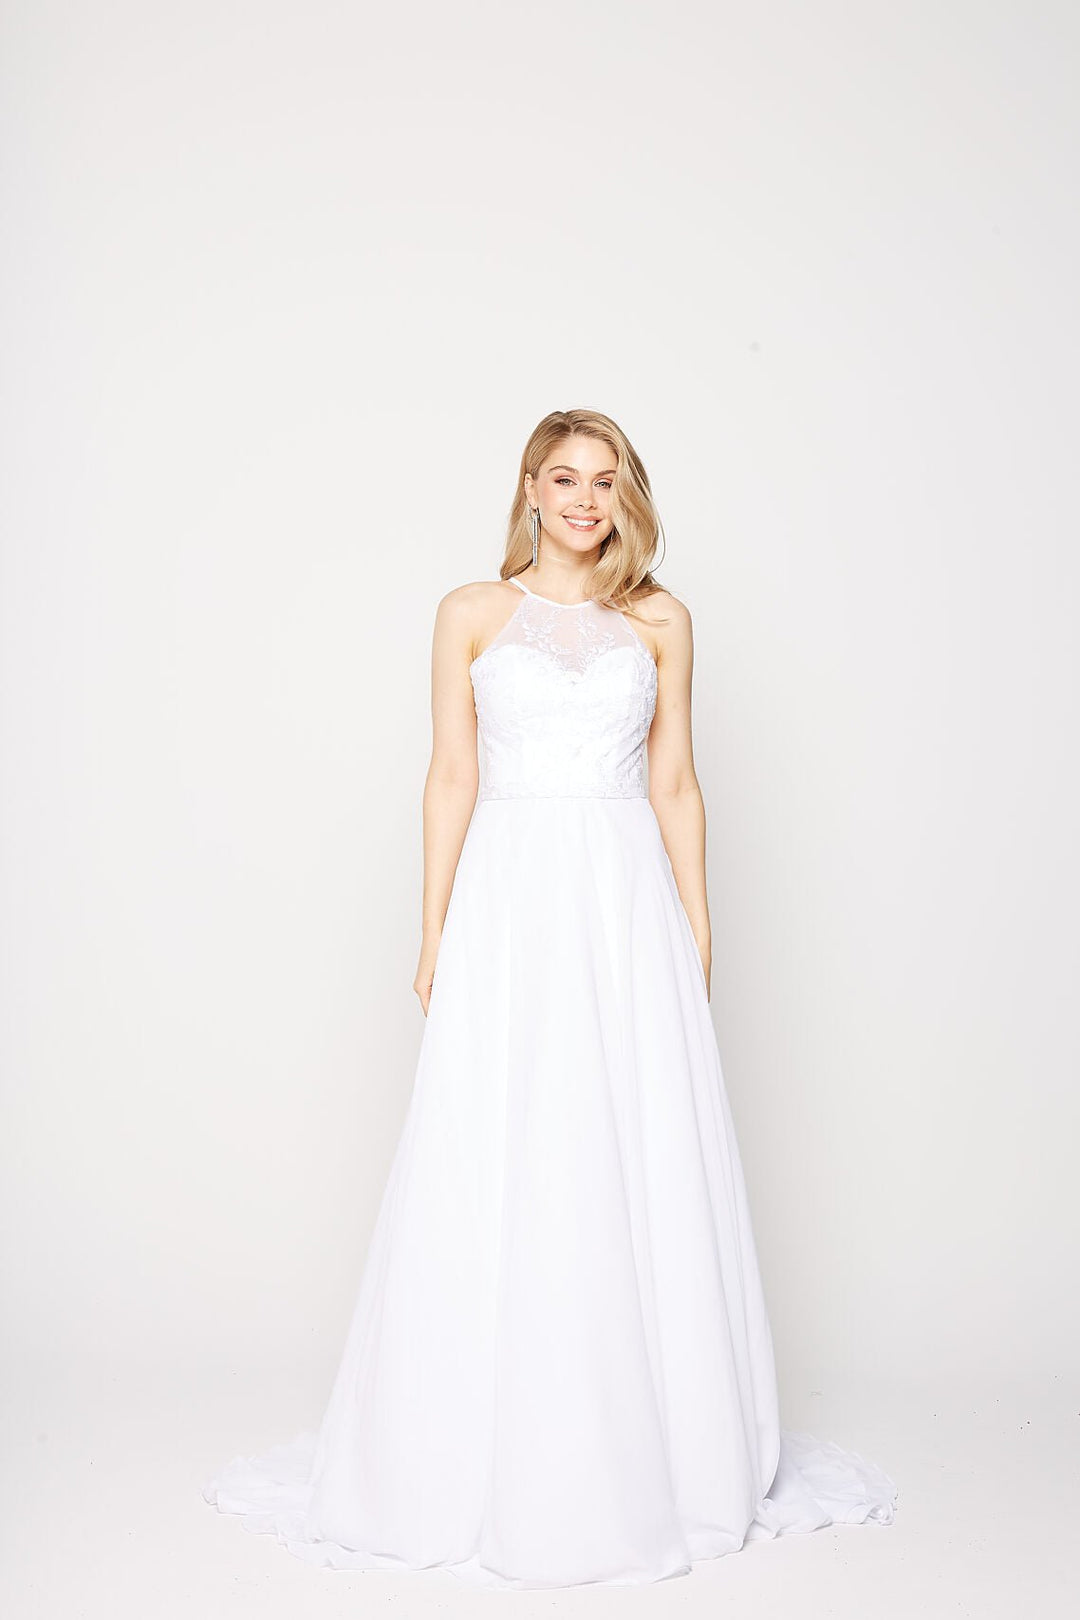 Heather Dress in White by Tania Olsen PO2310 - ElissaJay Boutique